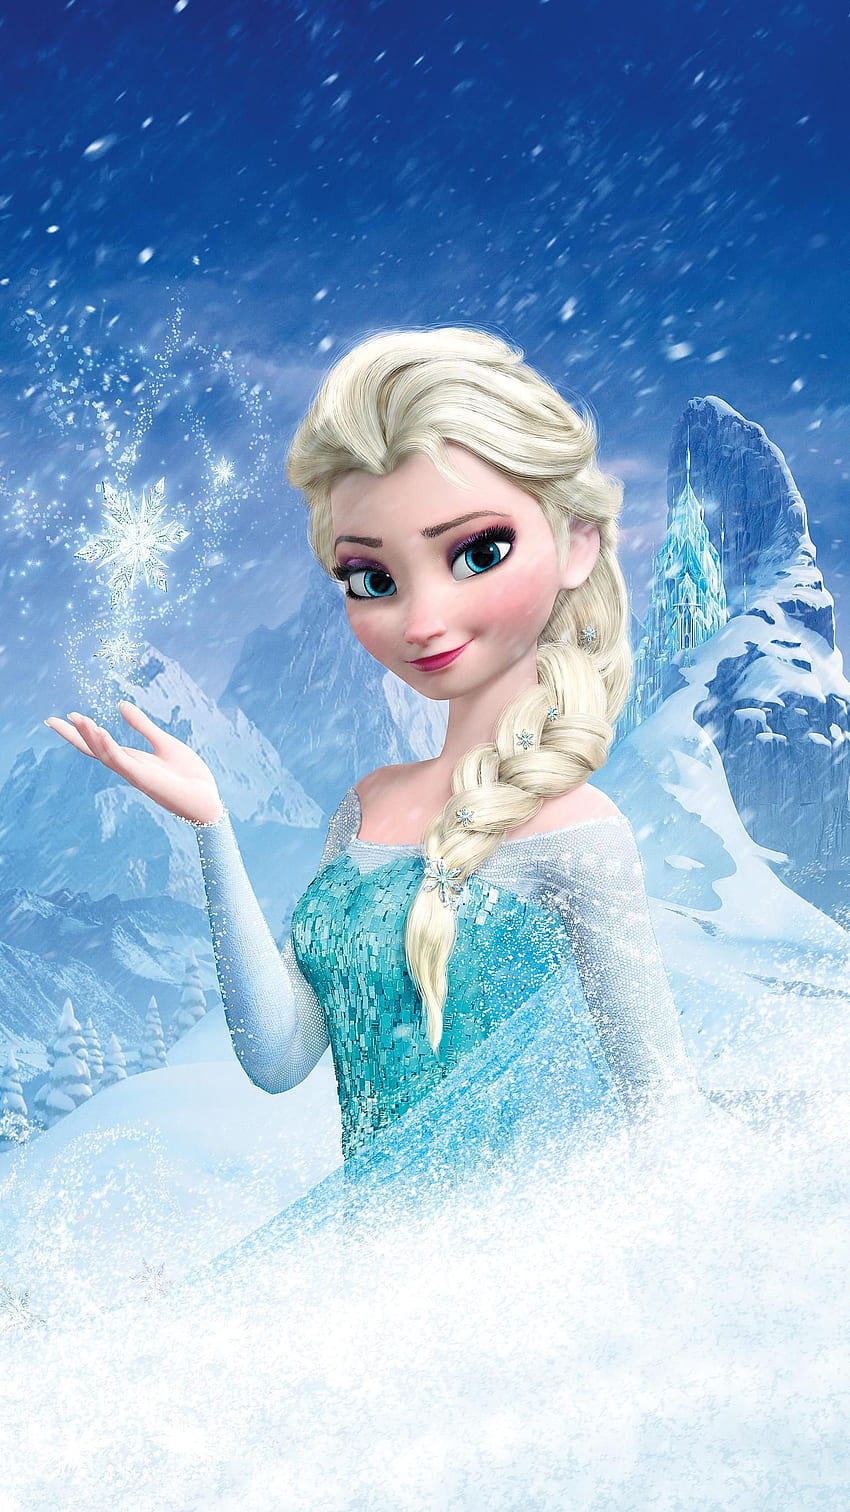 Frozen (2013) Teléfono. Cinemanía. Disney frozen elsa art, Frozen poster y Frozen fondo de pantalla del teléfono